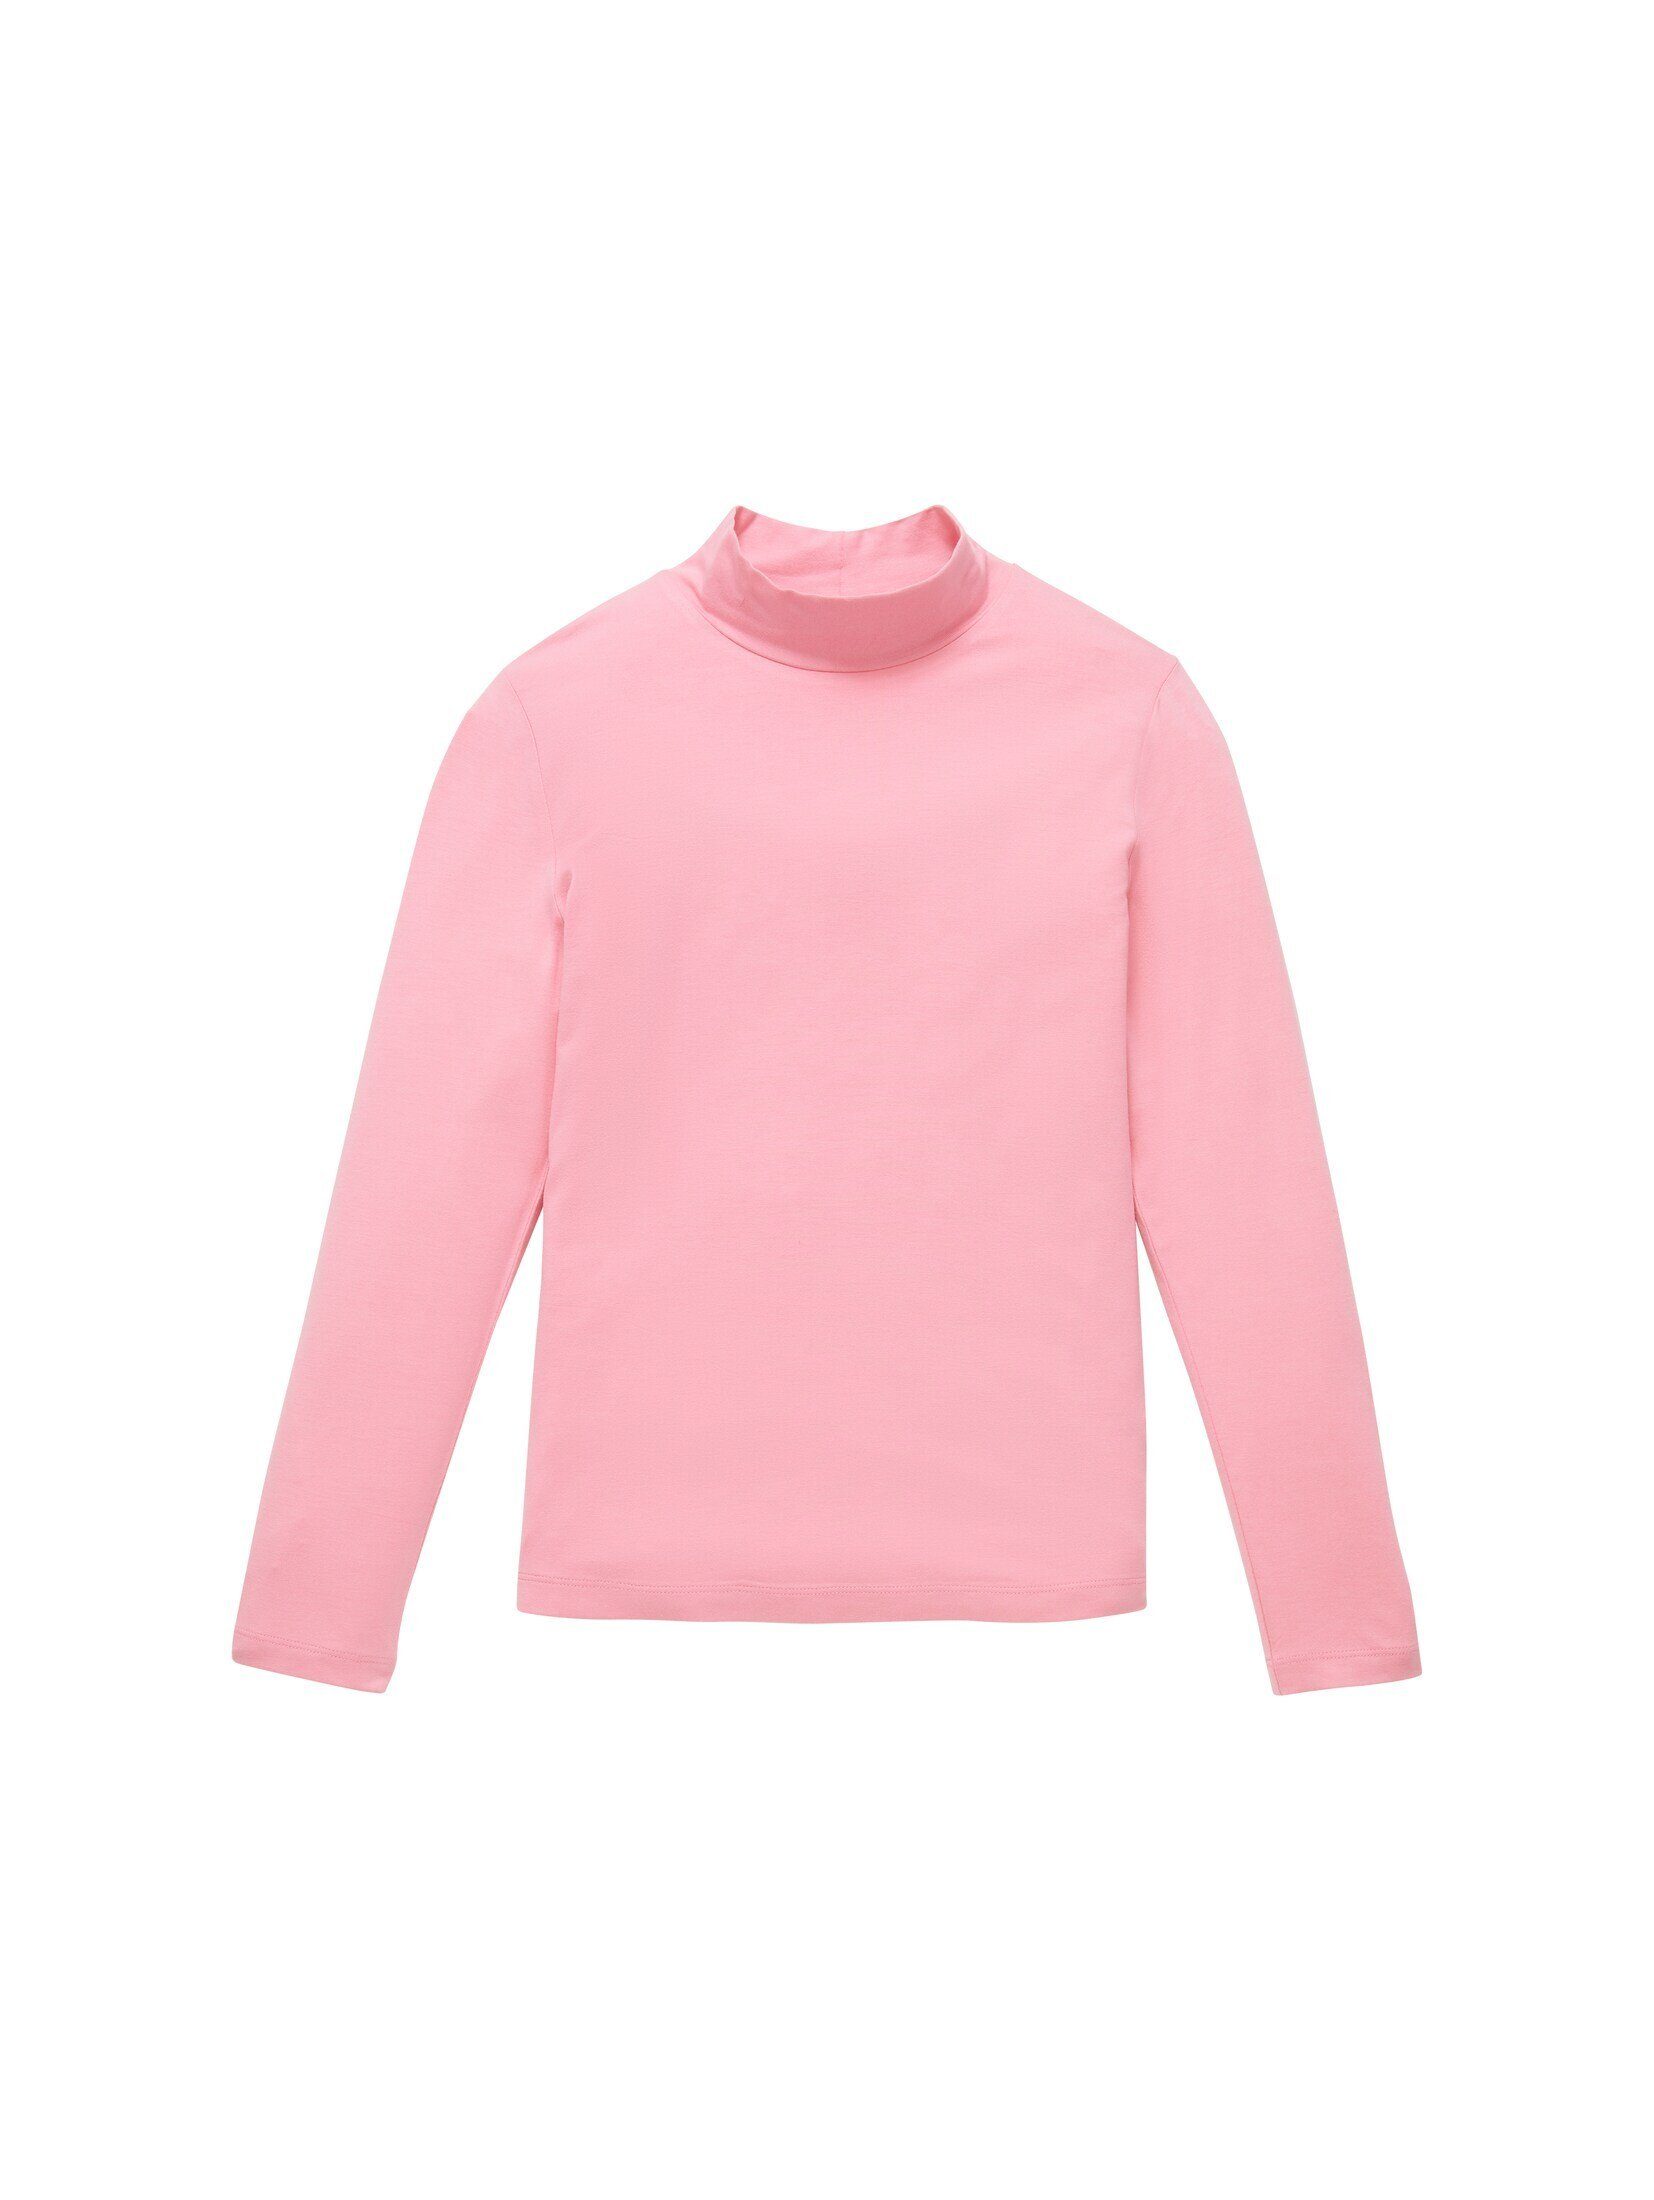 TOM TAILOR T-Shirt Langarmshirt mit LENZING(TM) pink sunrise ECOVERO(TM)